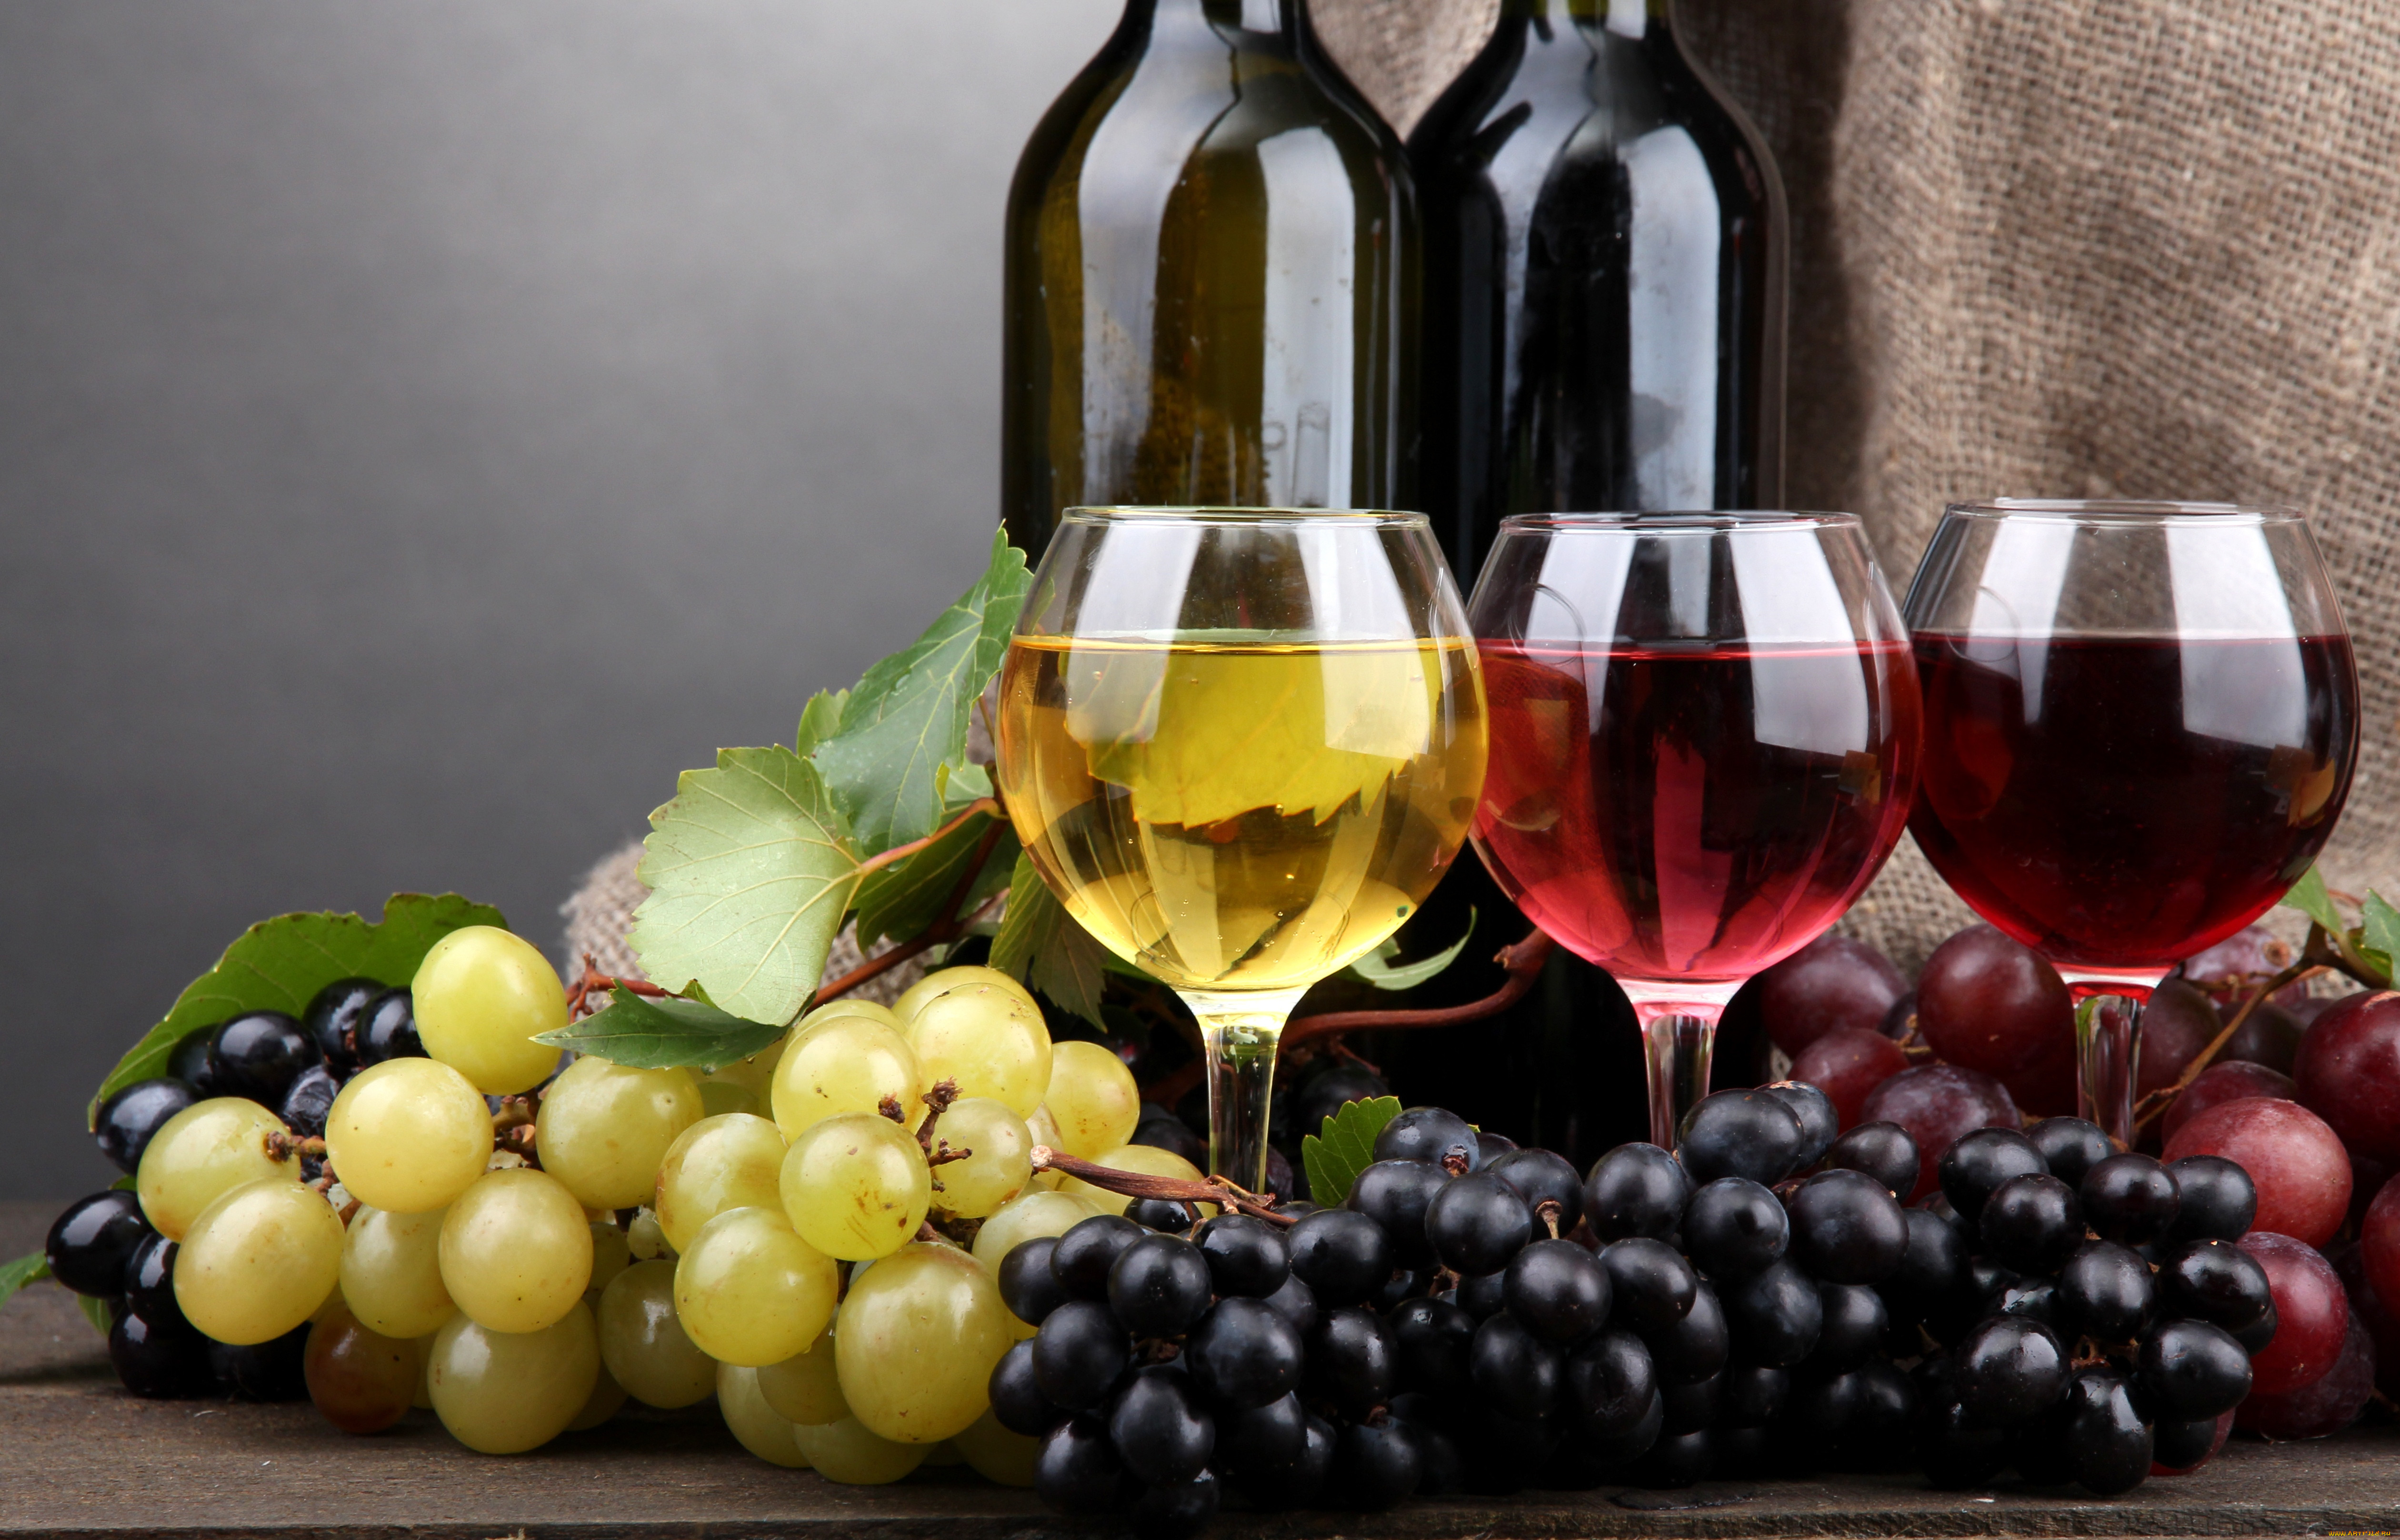 Вторая половина вина. Молдавия виноградники и вино. Грузия vino vinograd. Красное вино. Бокал с вином.